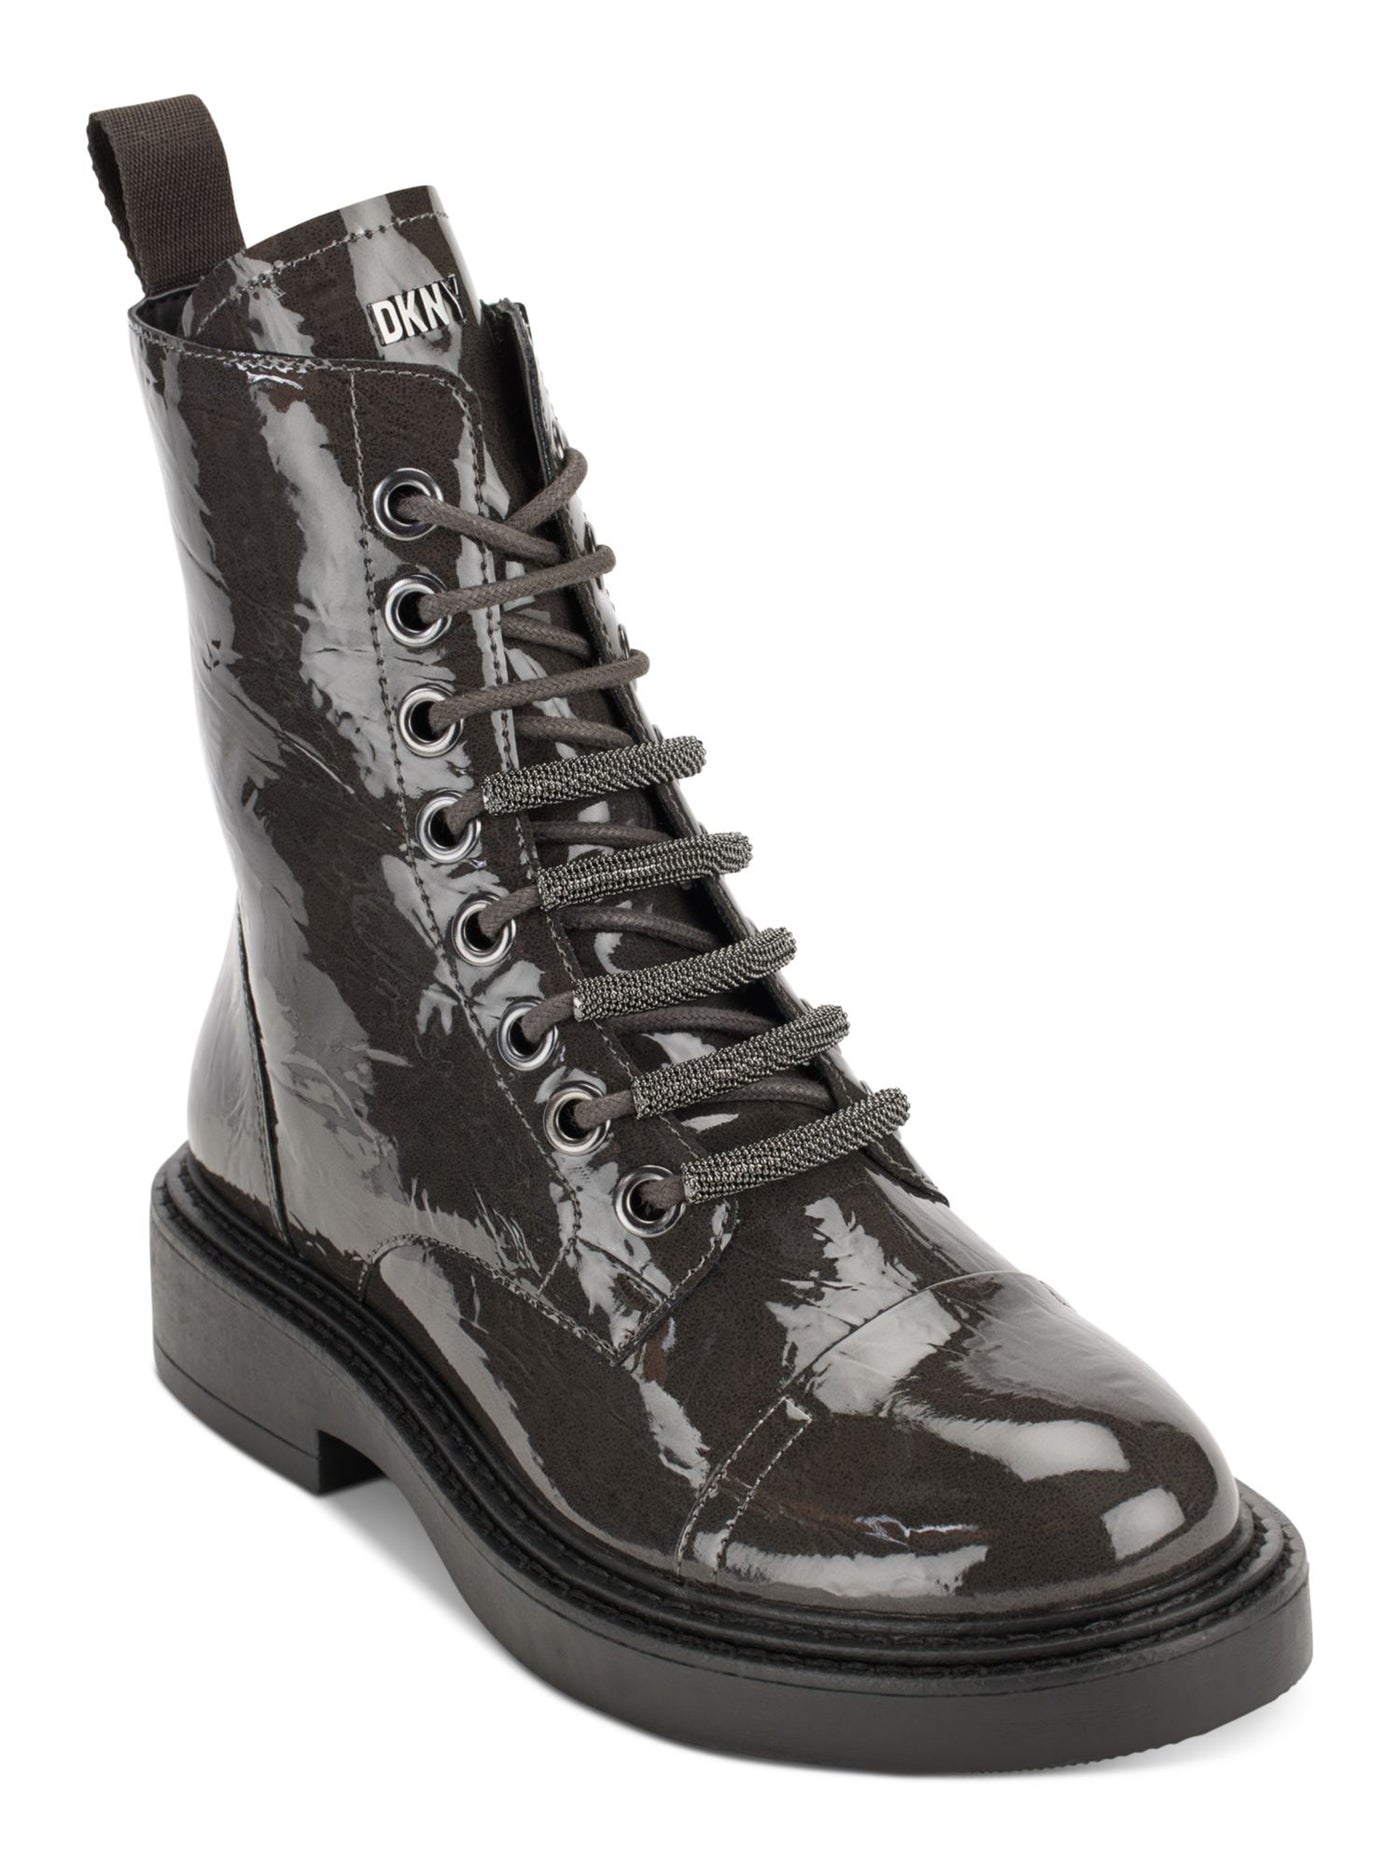 DKNY Womens Gray Metallic Malaya Almond Toe Block Heel Lace-Up Combat Boots 7.5 M